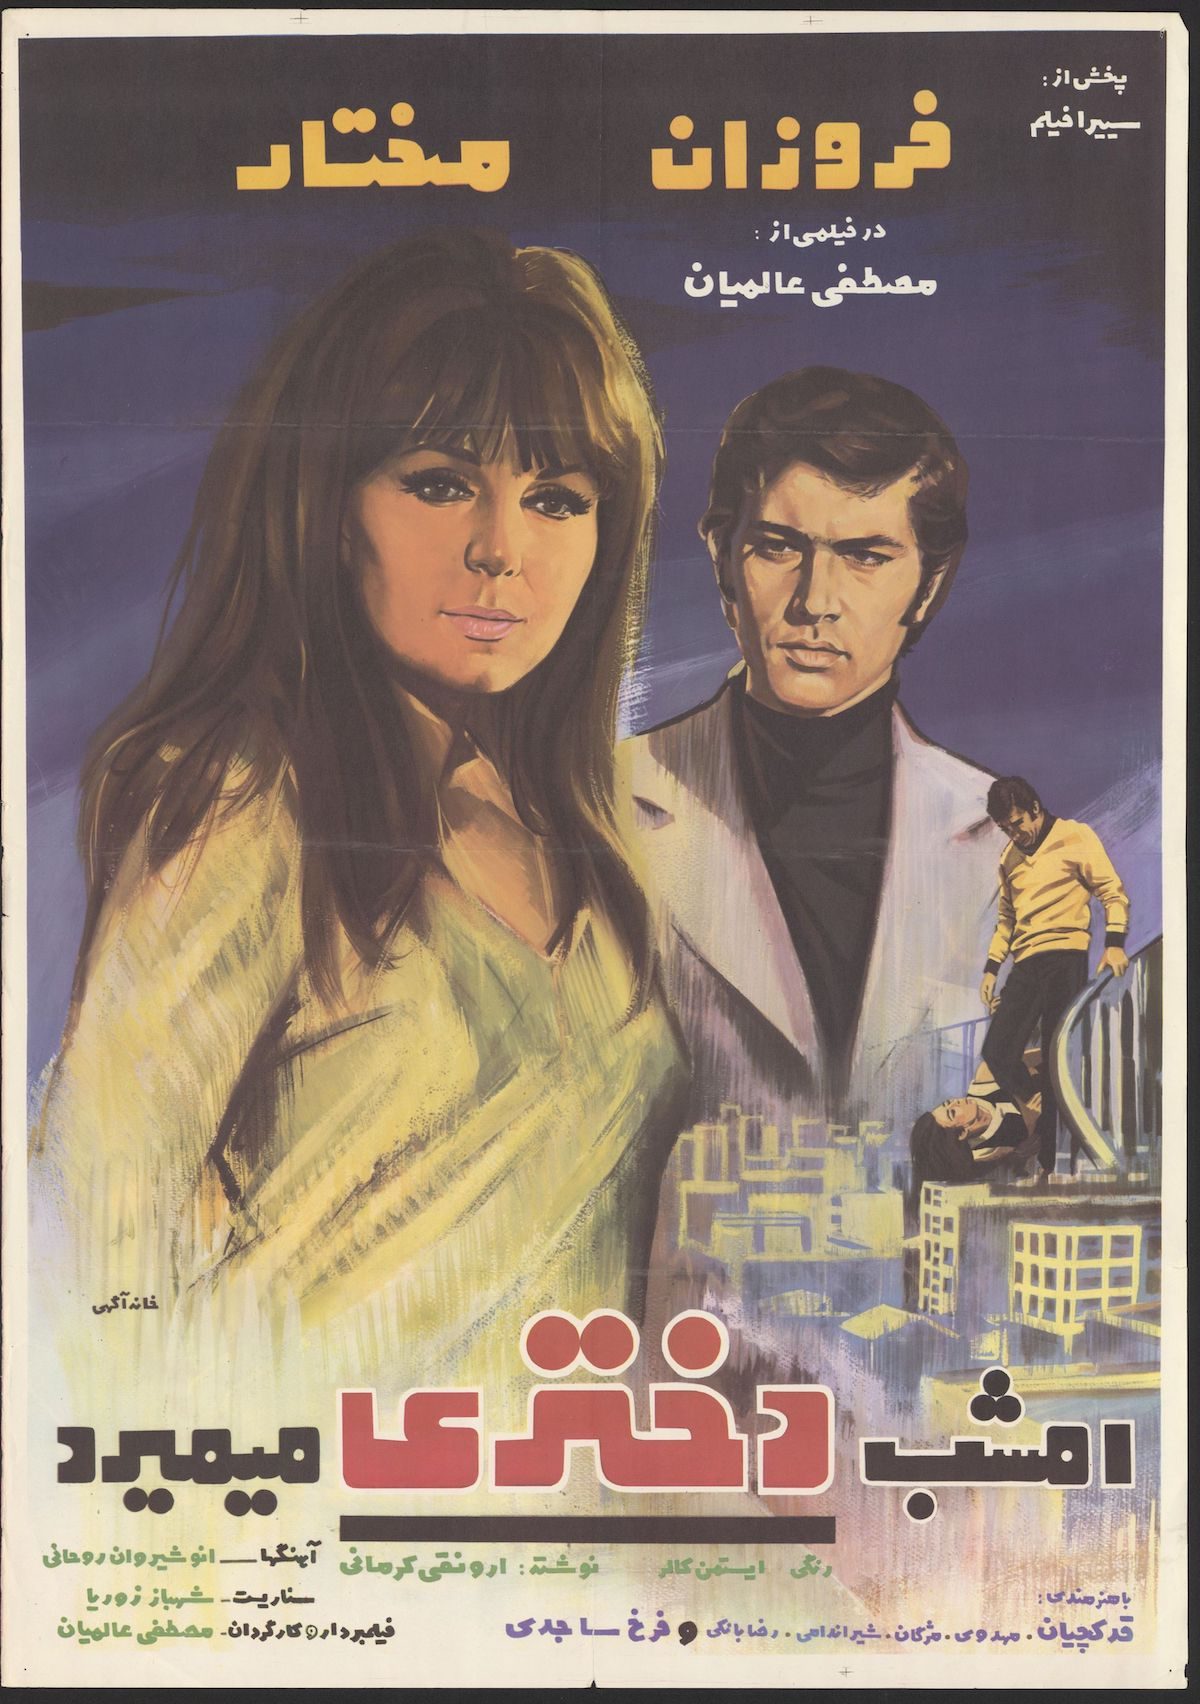 Iranian film posters